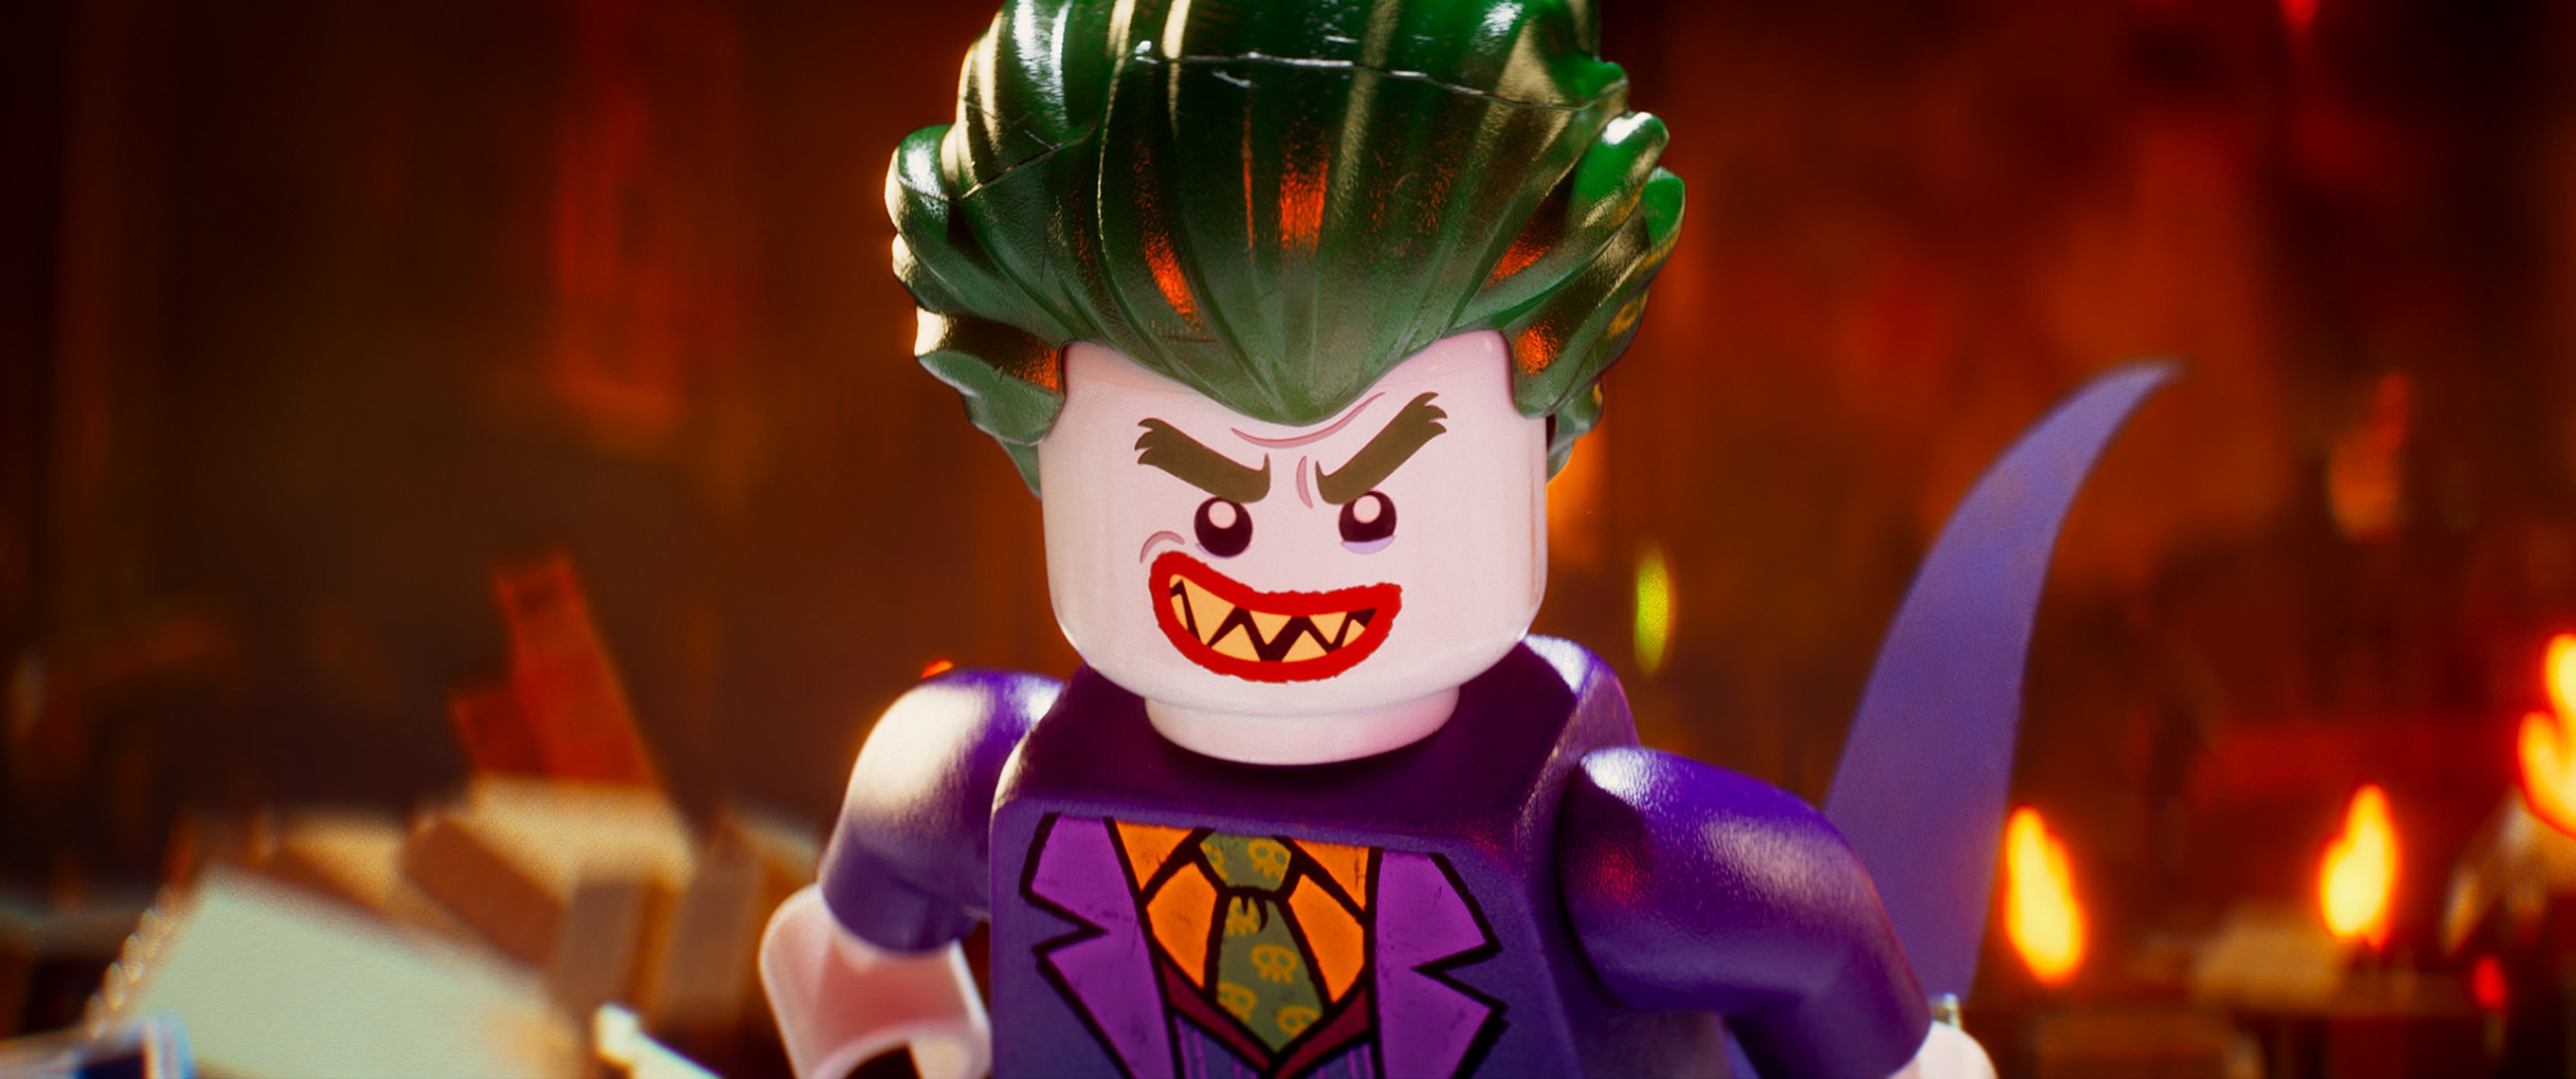 Image du film Lego Batman : le film 9bc6b309-f2e1-4265-bdab-1555e4f641ca